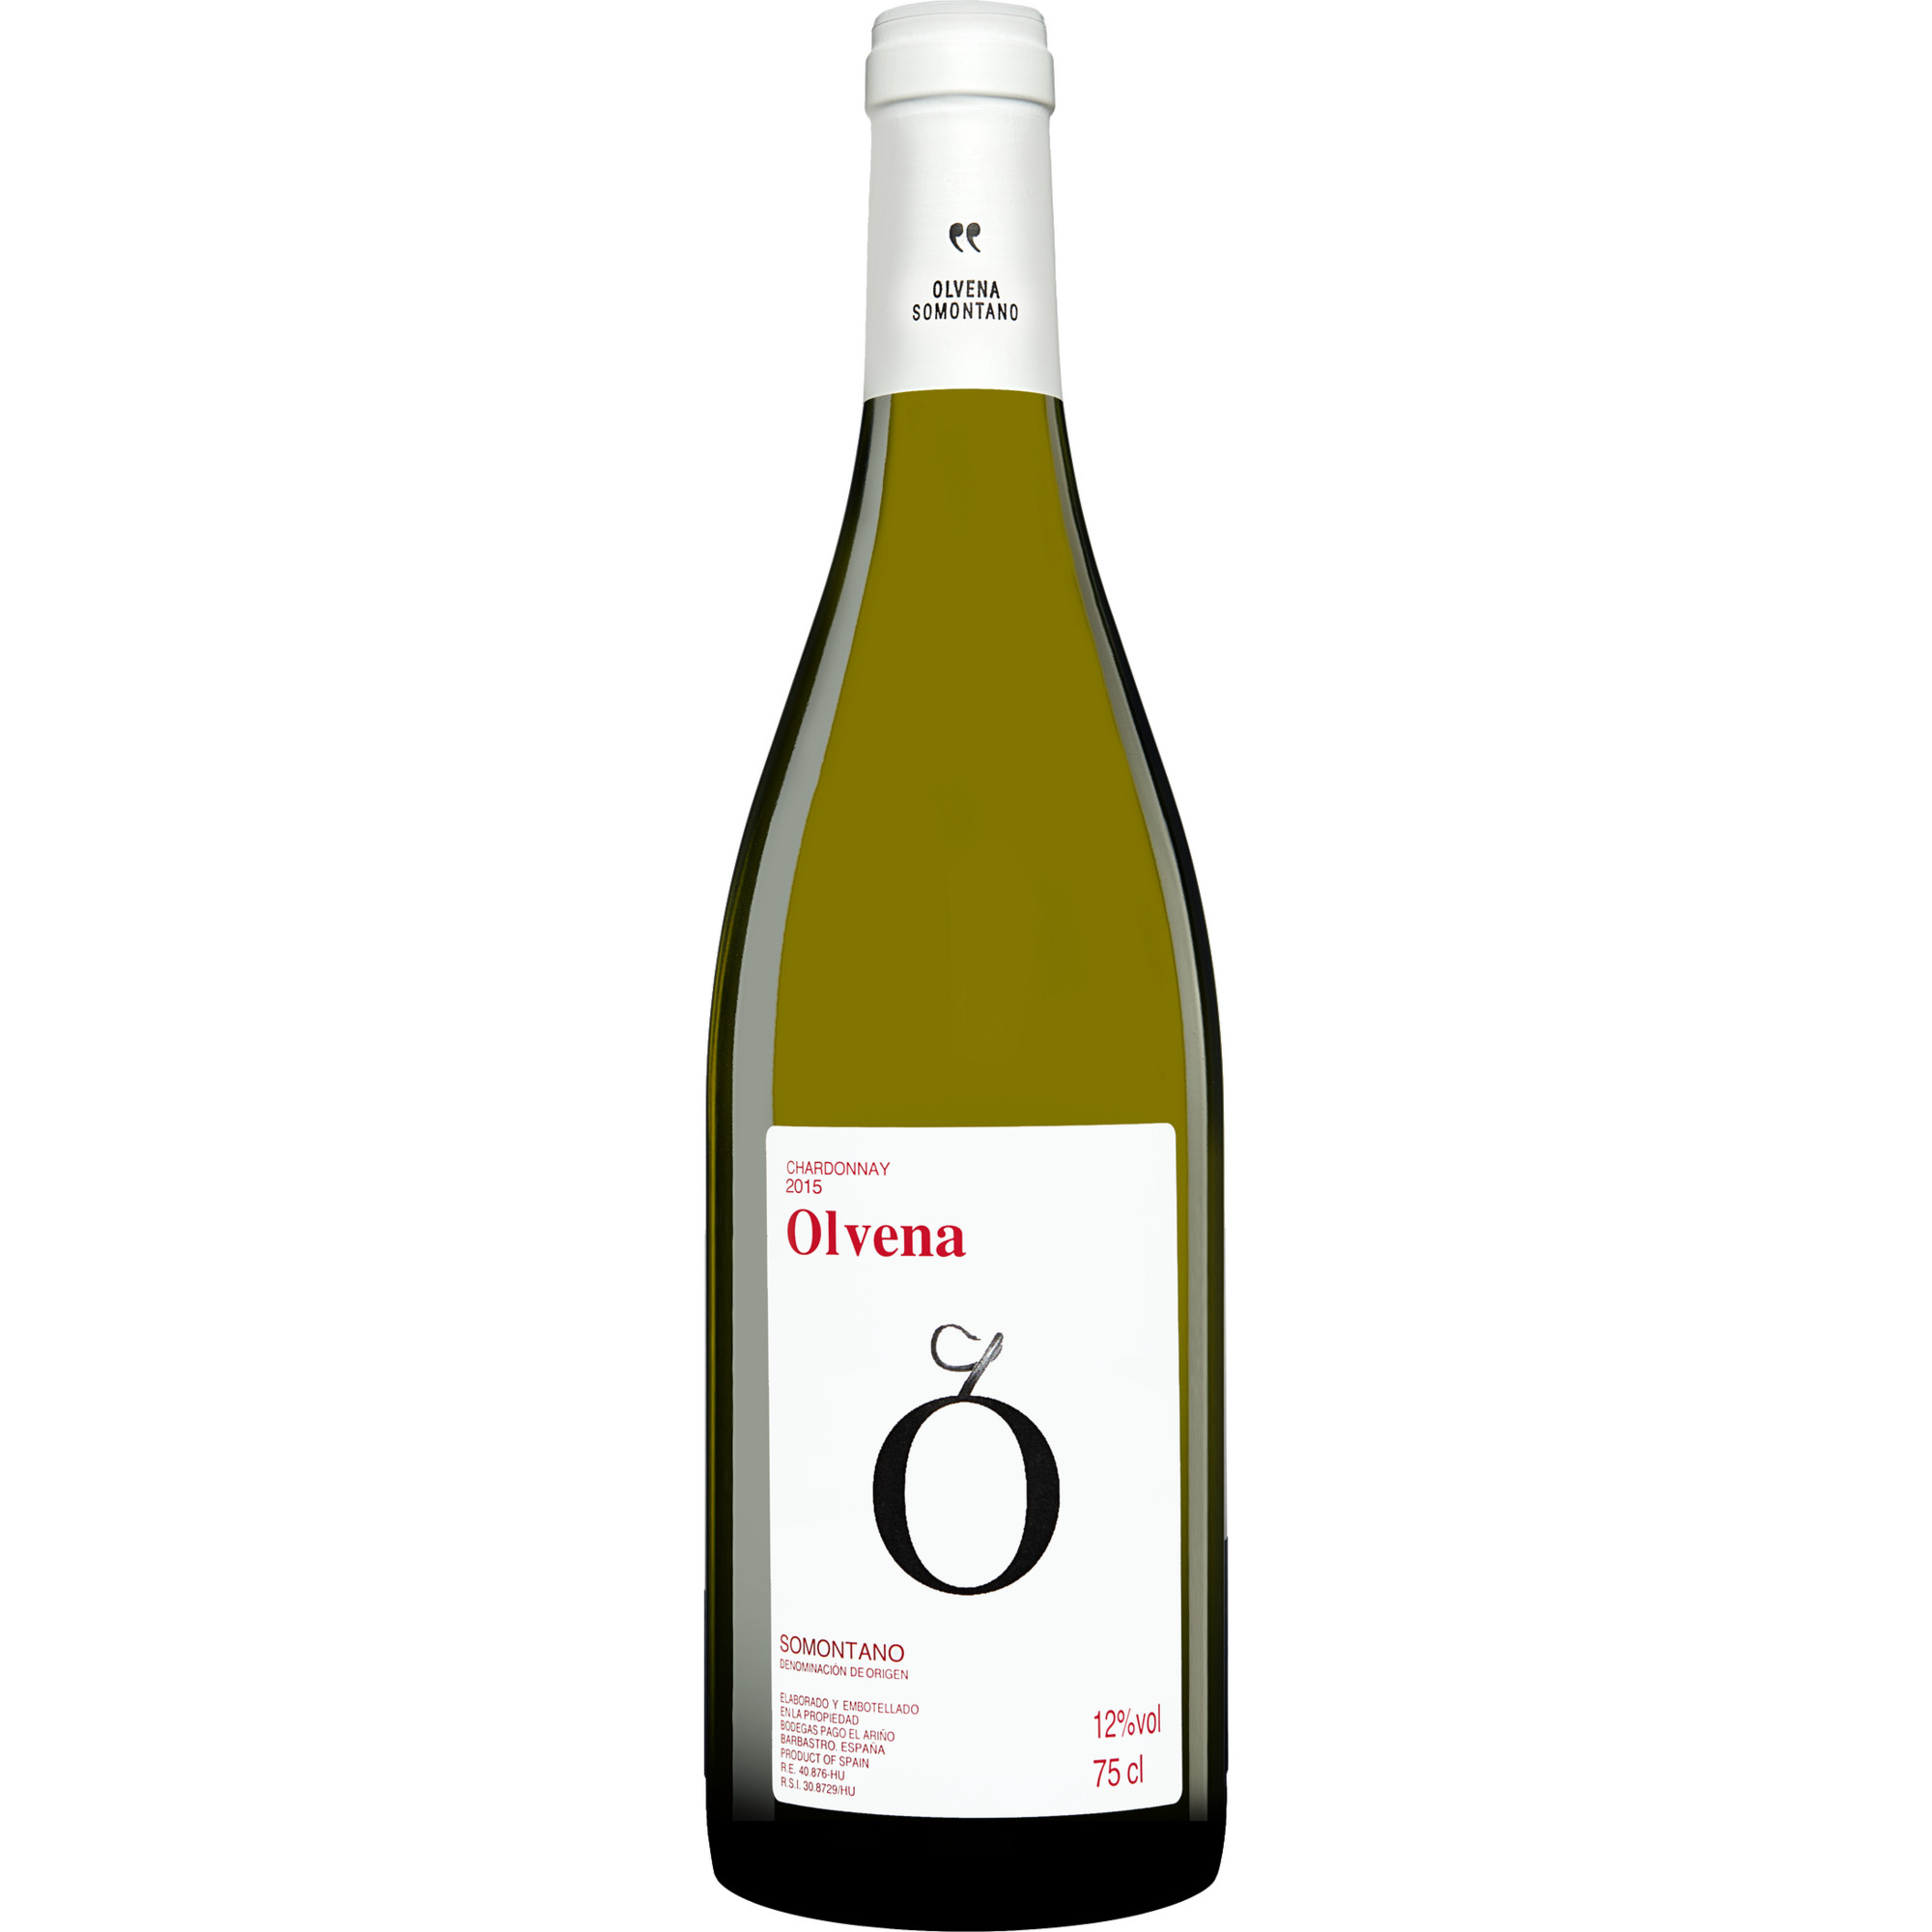 Bottle of Olvena Chardonnaywith label visible